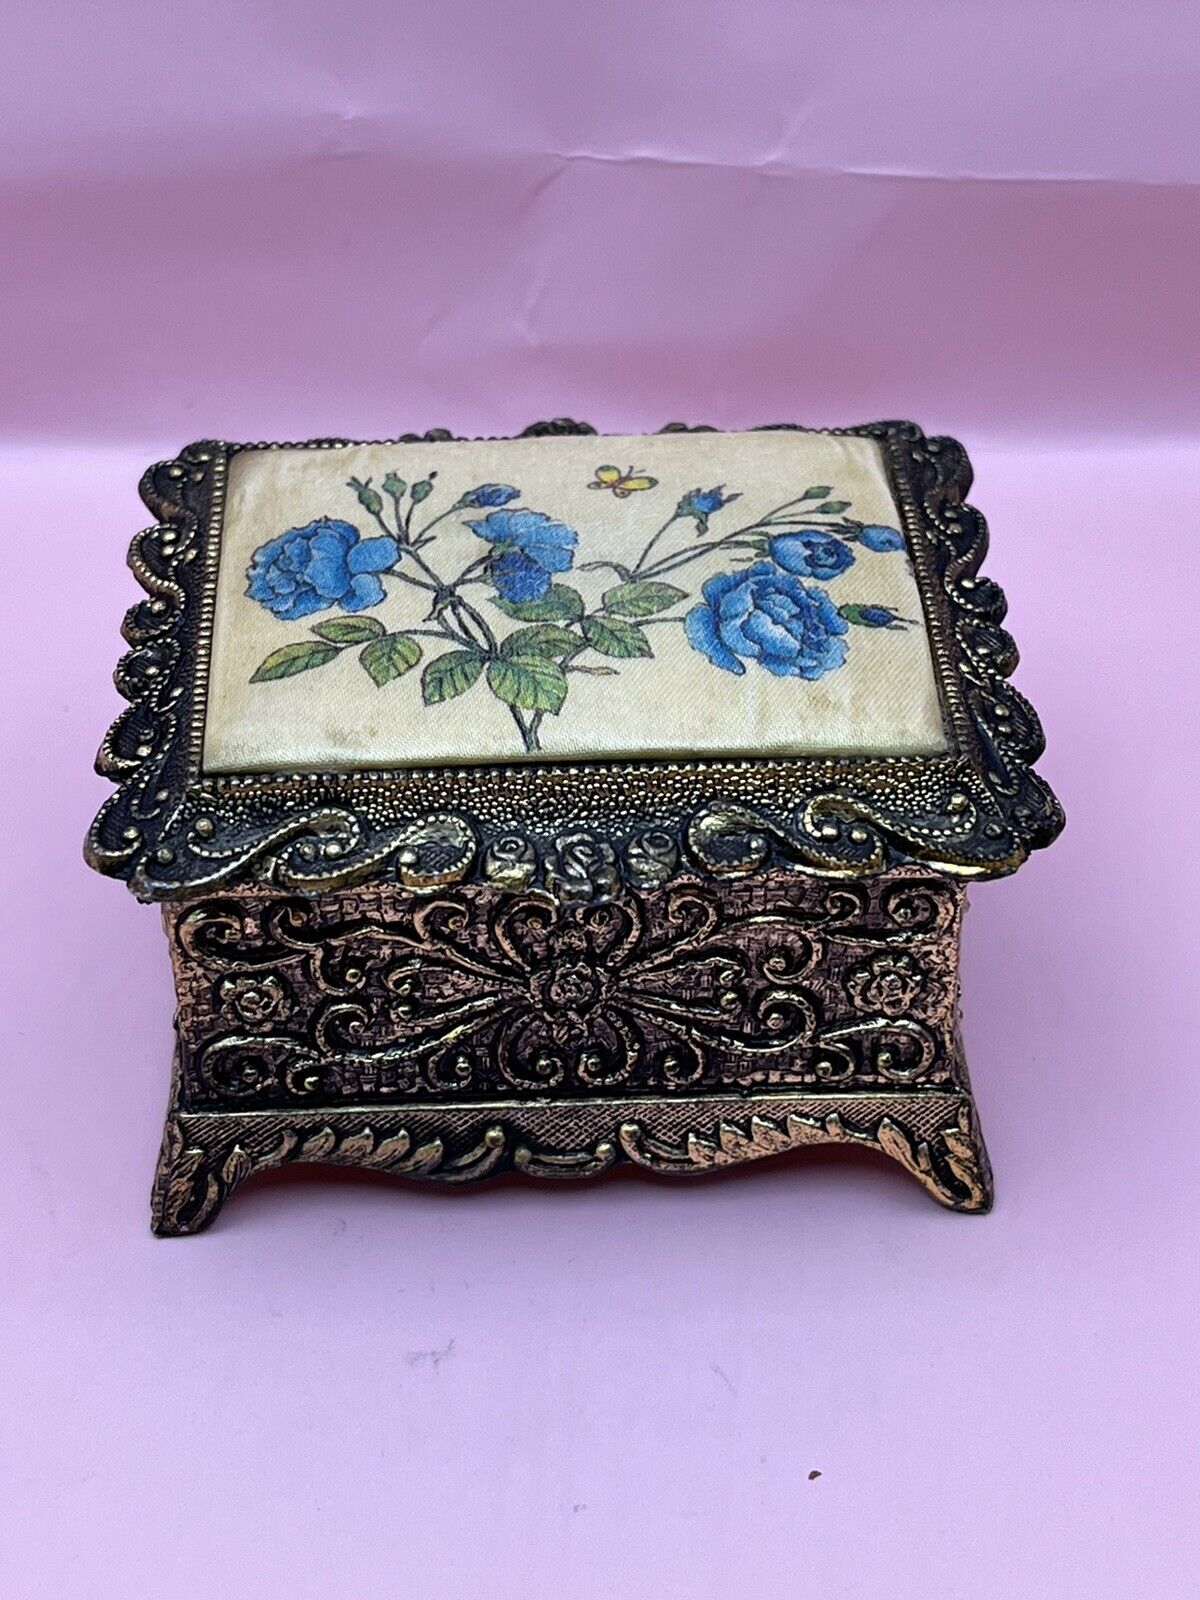 VINTAGE MUSIC METAL FOOTED TRINKET JEWELRY BOX Silk Floral Design Blue Roses